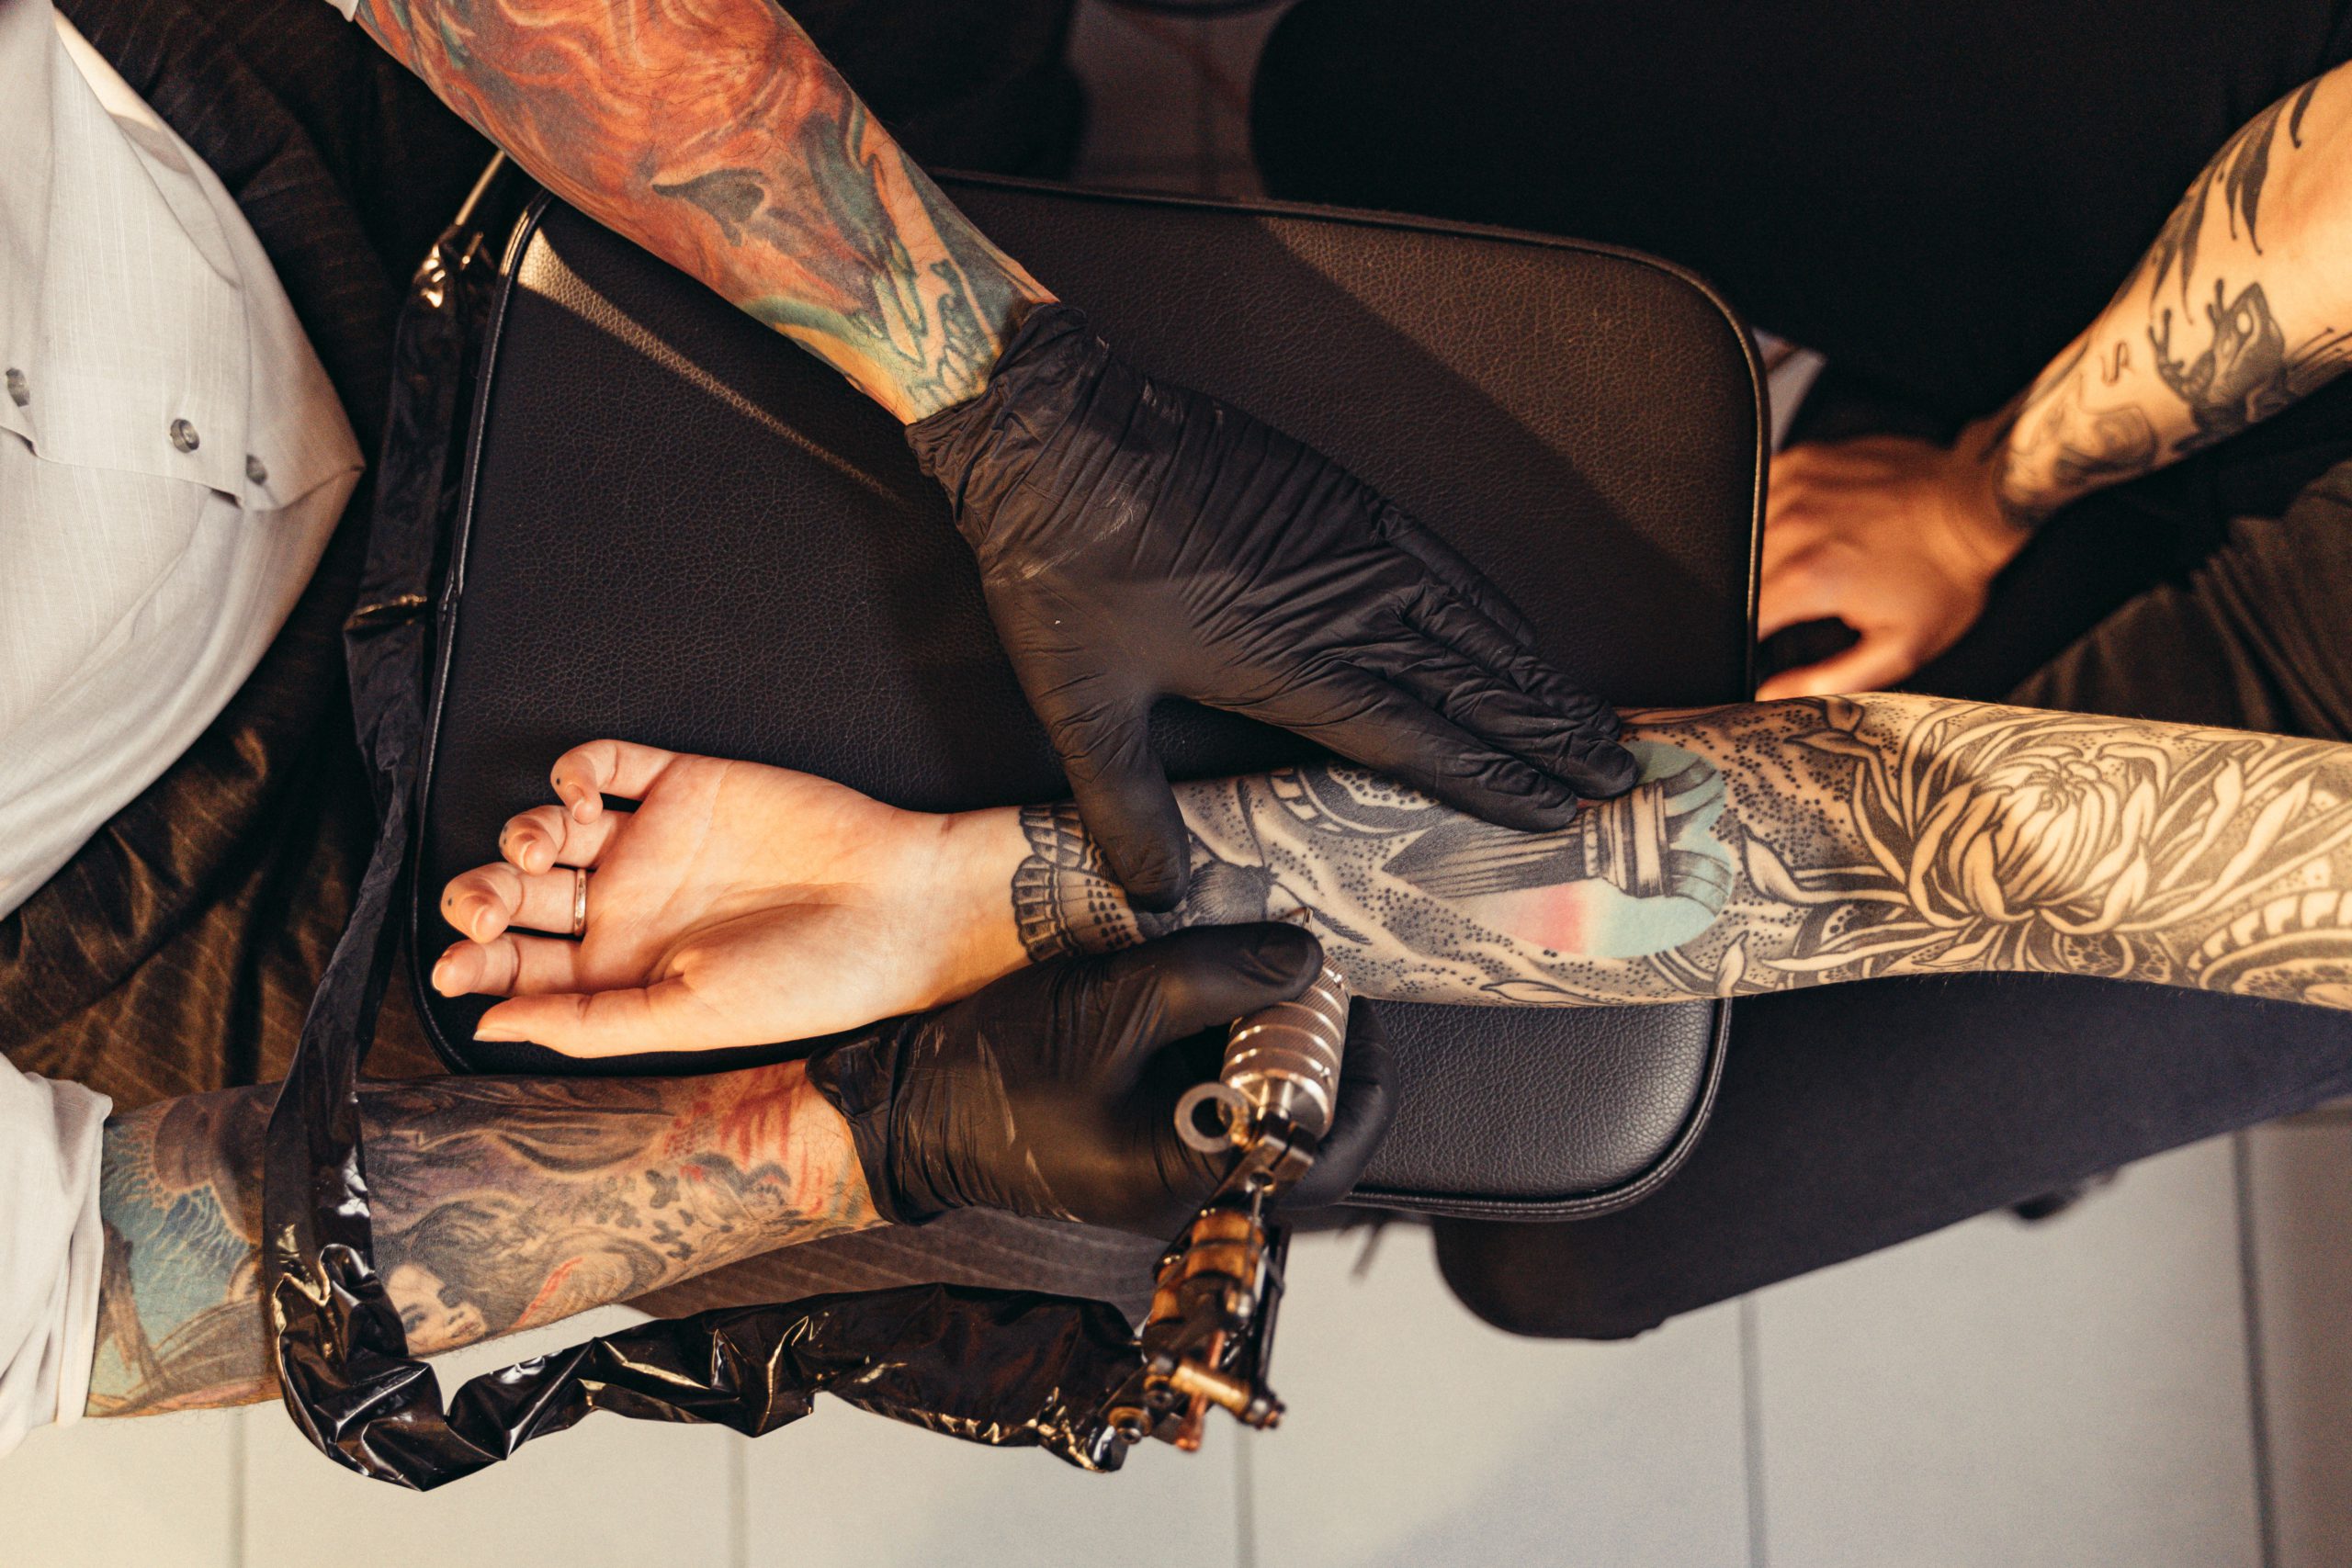 Should Christians Get Tattoos?